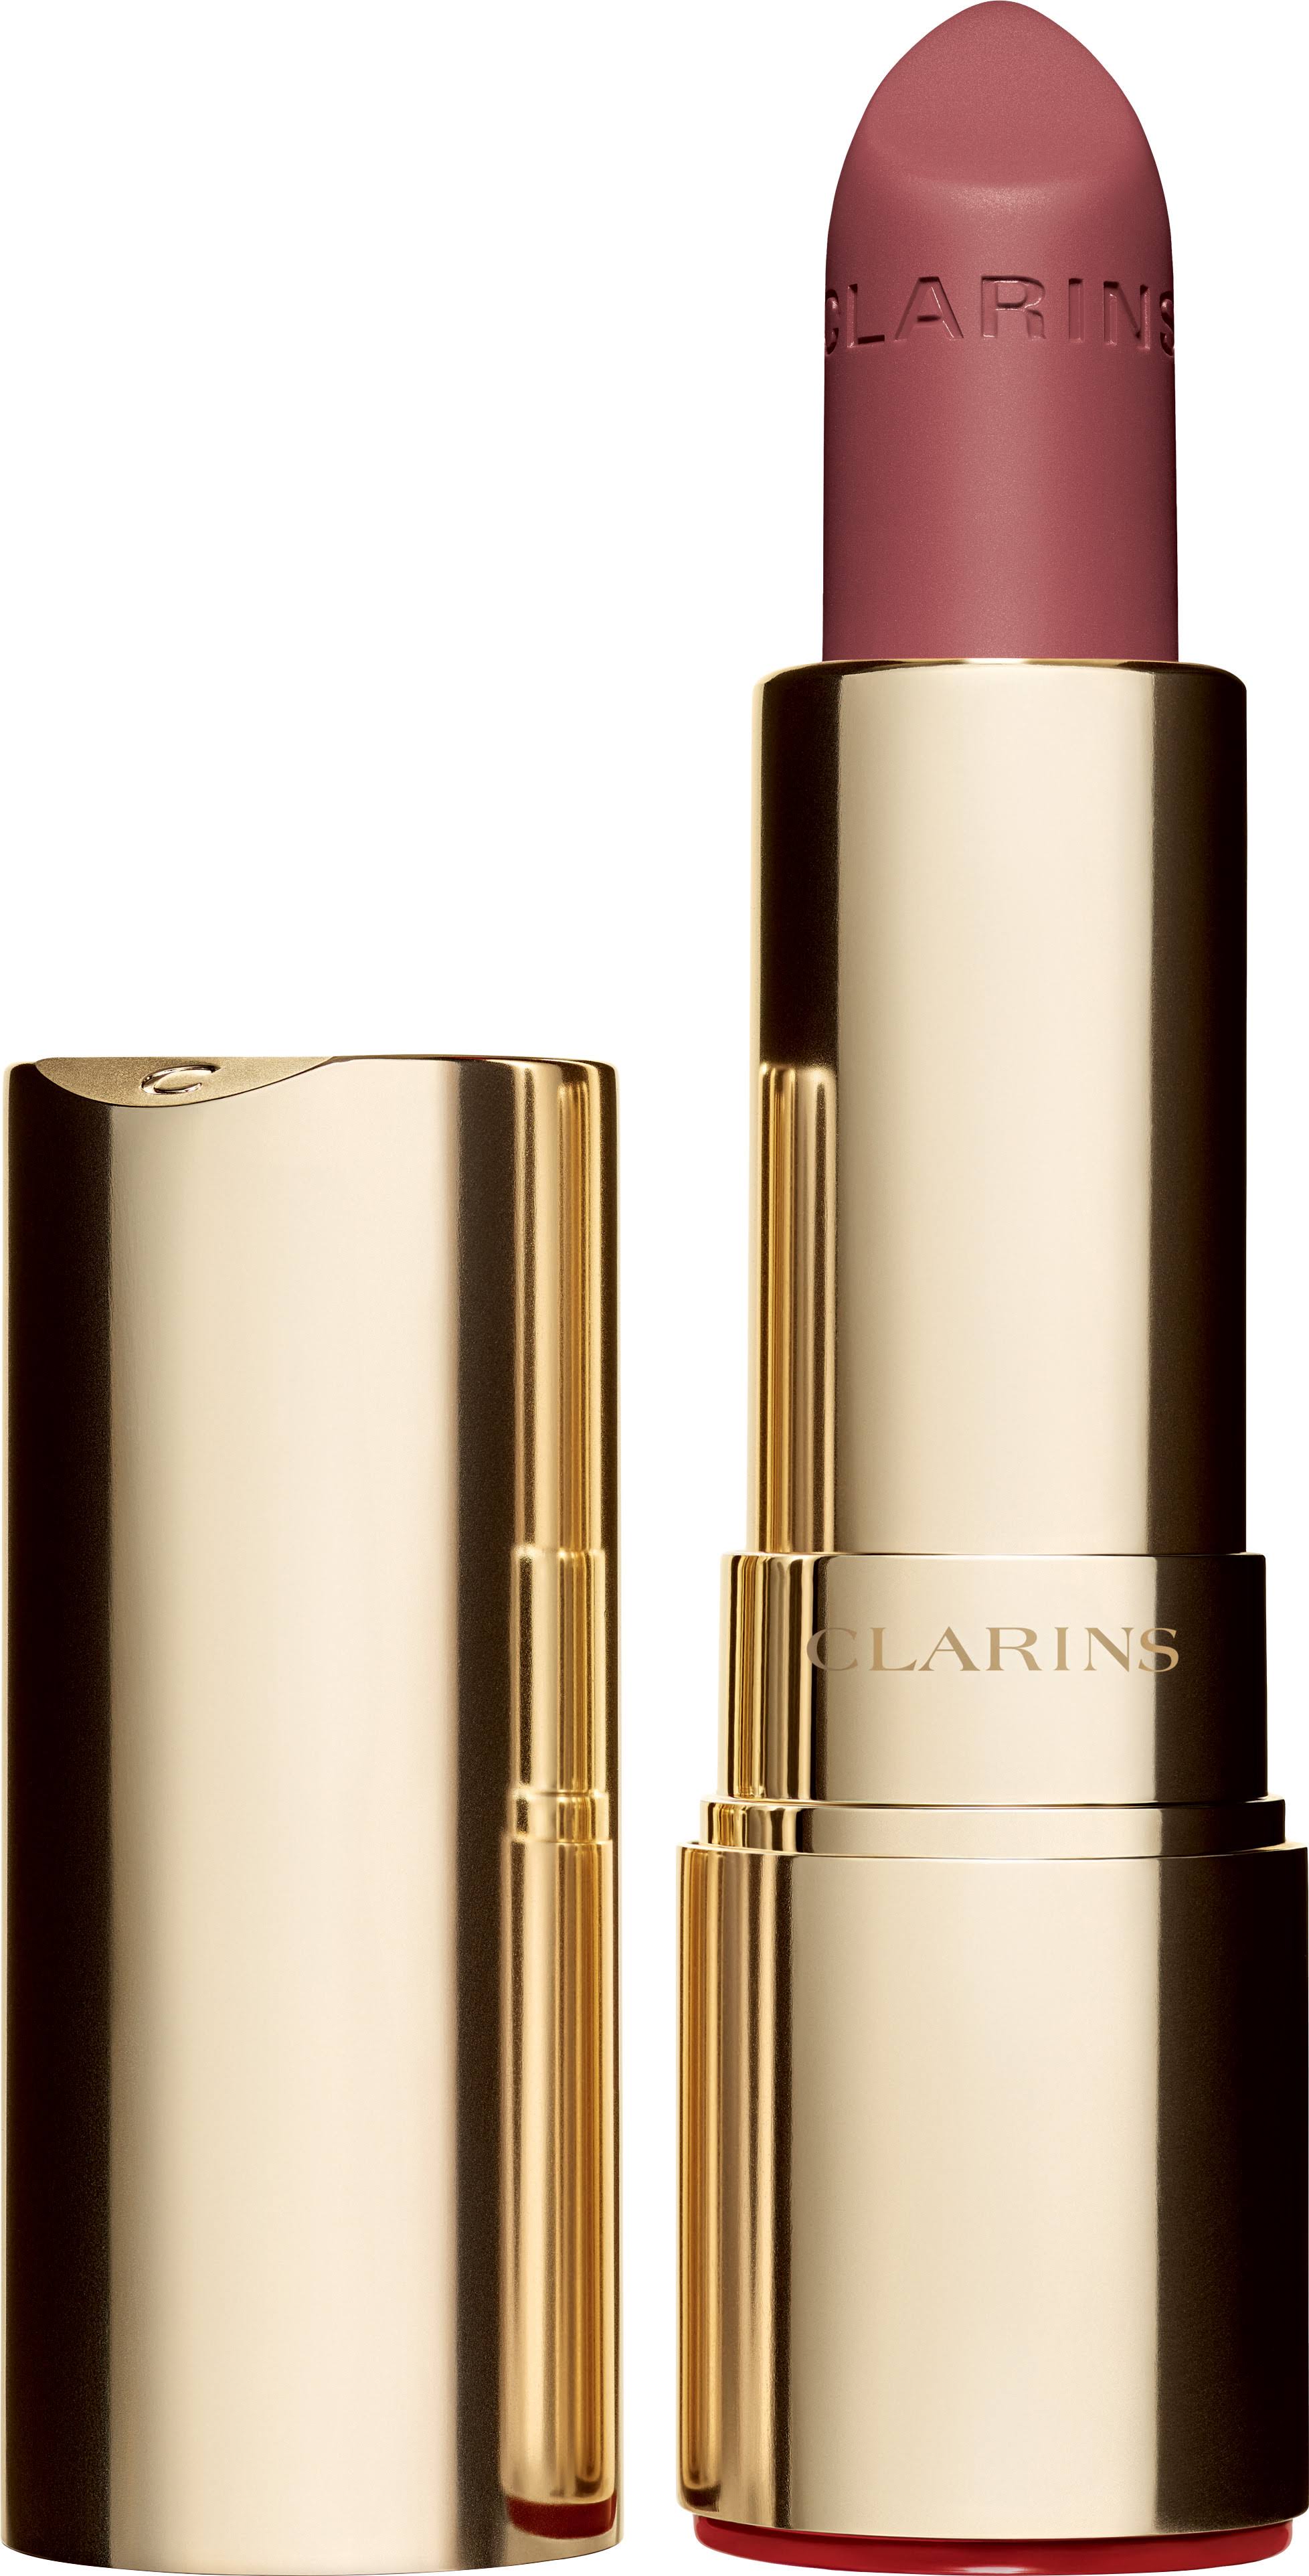 Clarins Joli Rouge Velvet' Lipstick - 705m Soft Berry, 3.5g